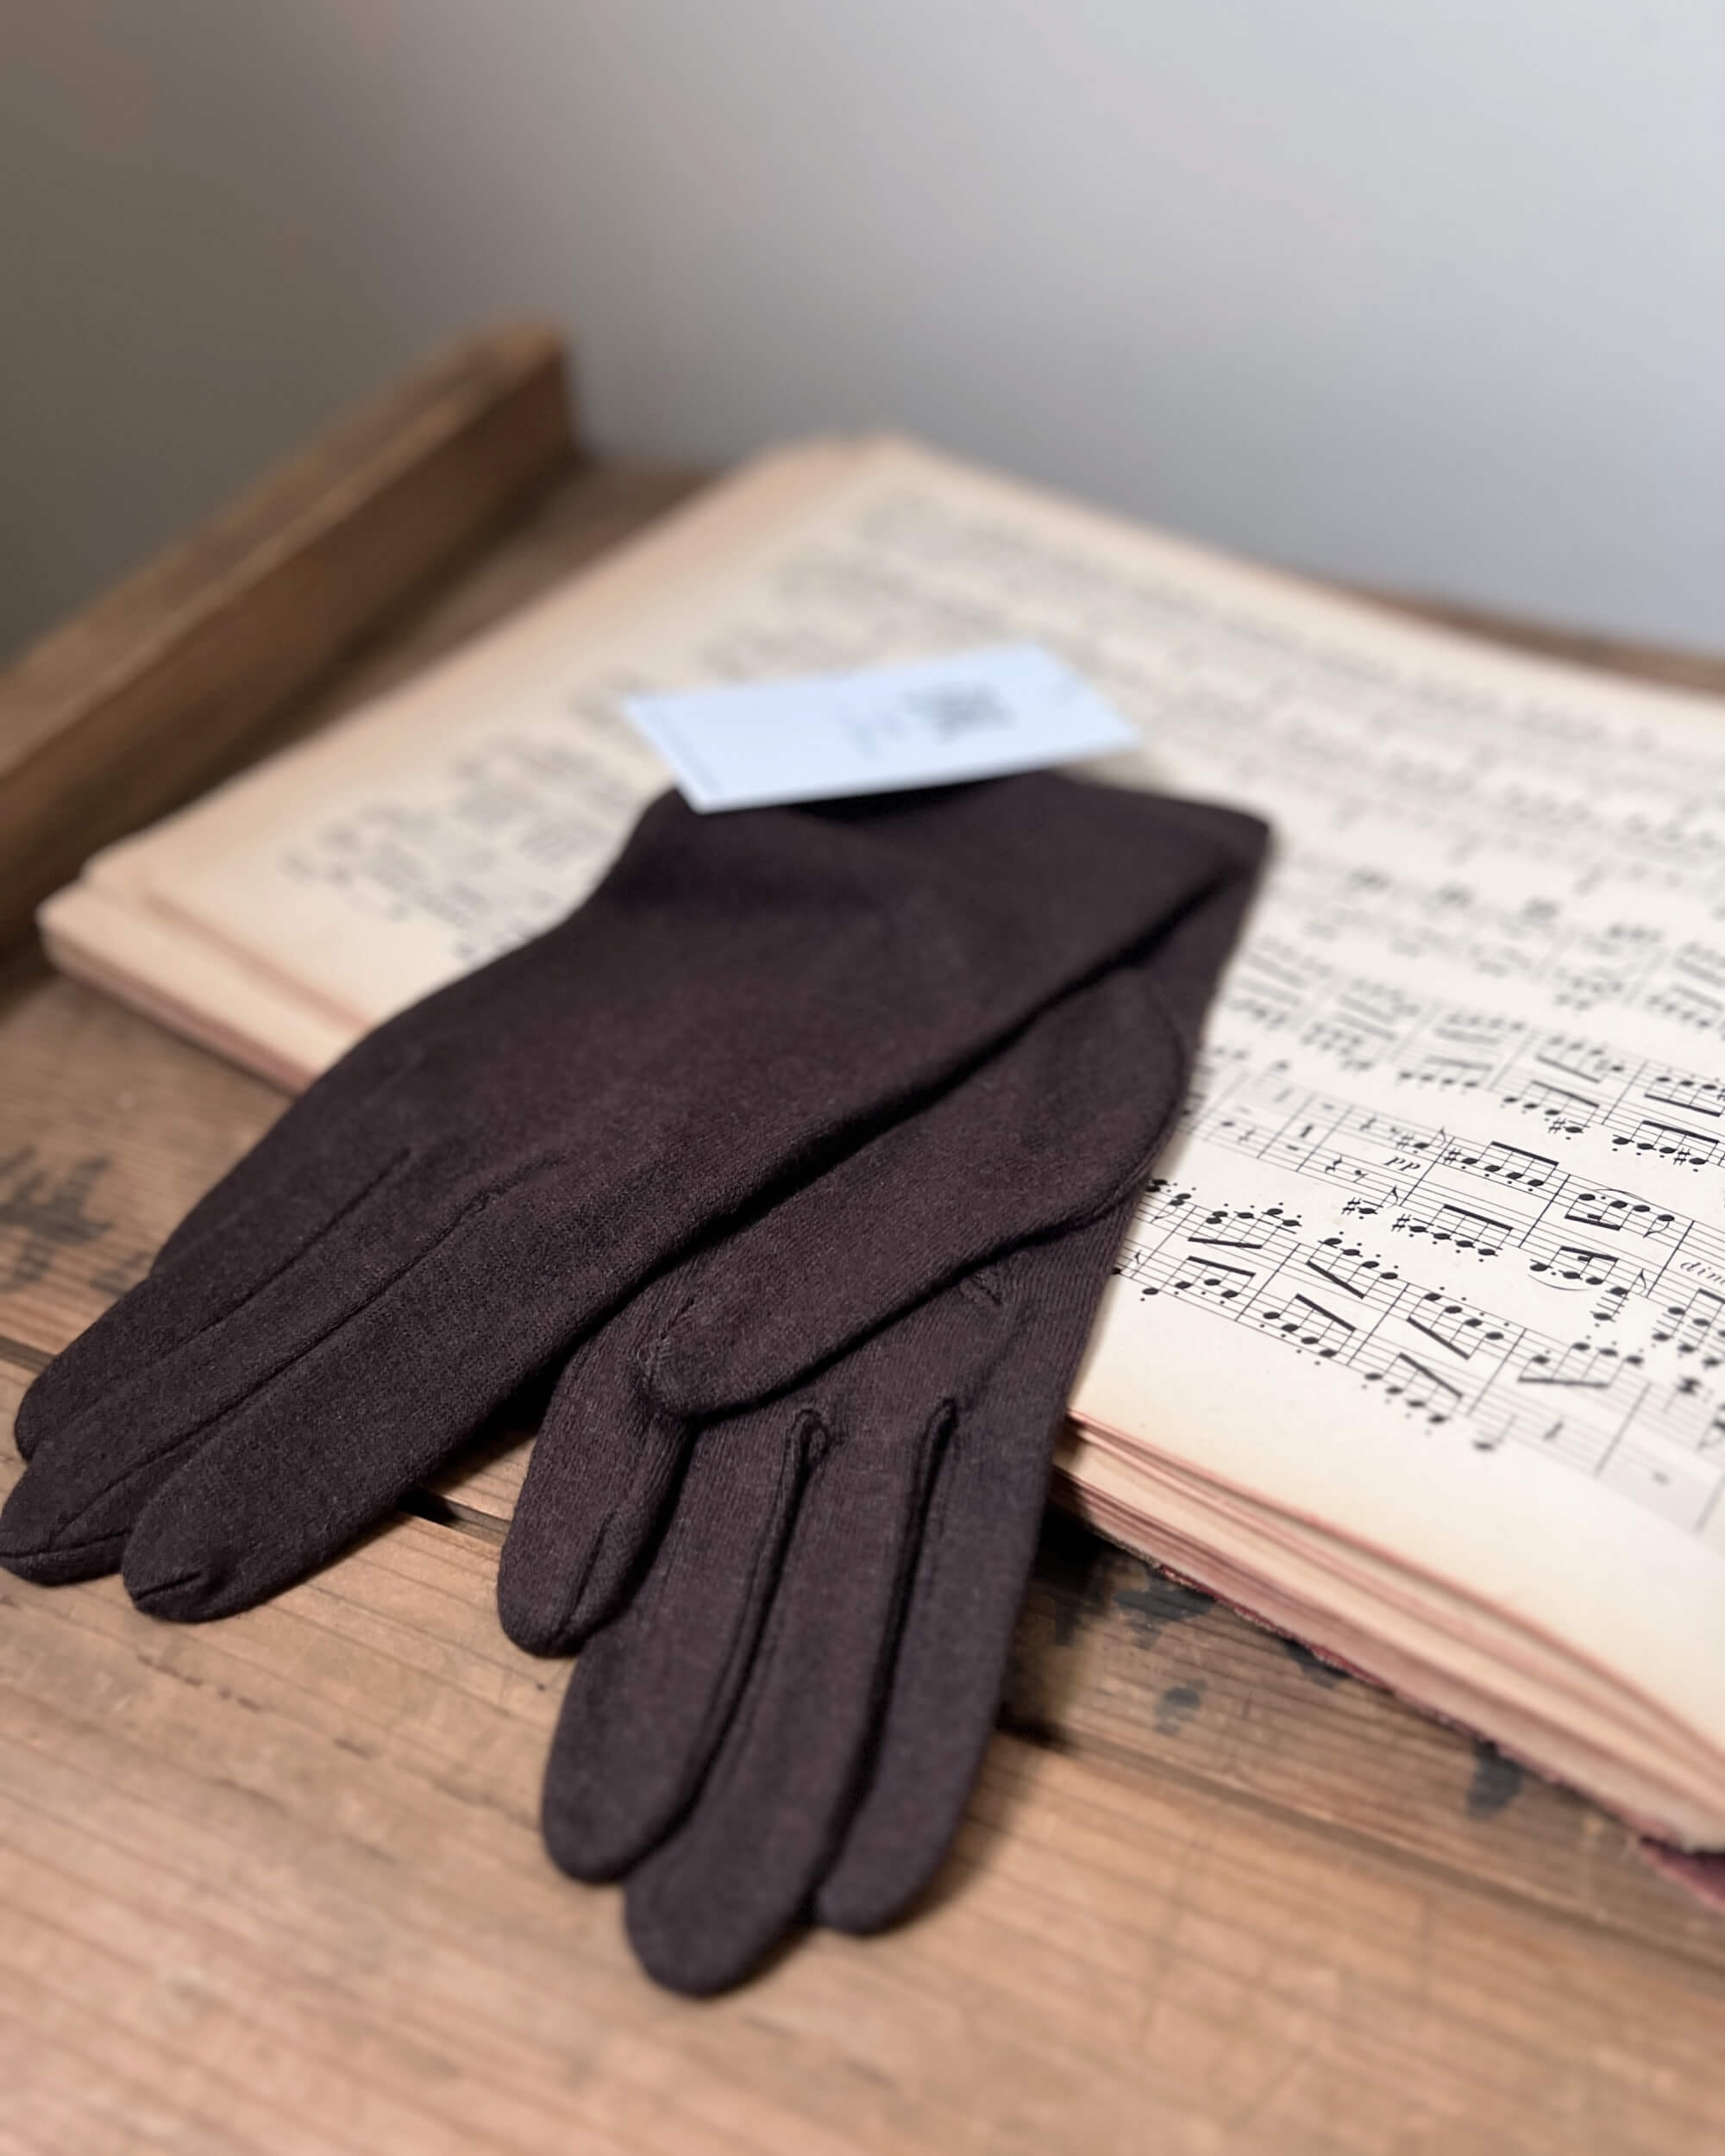 japanese made wool gloves from the hiteka artisan community